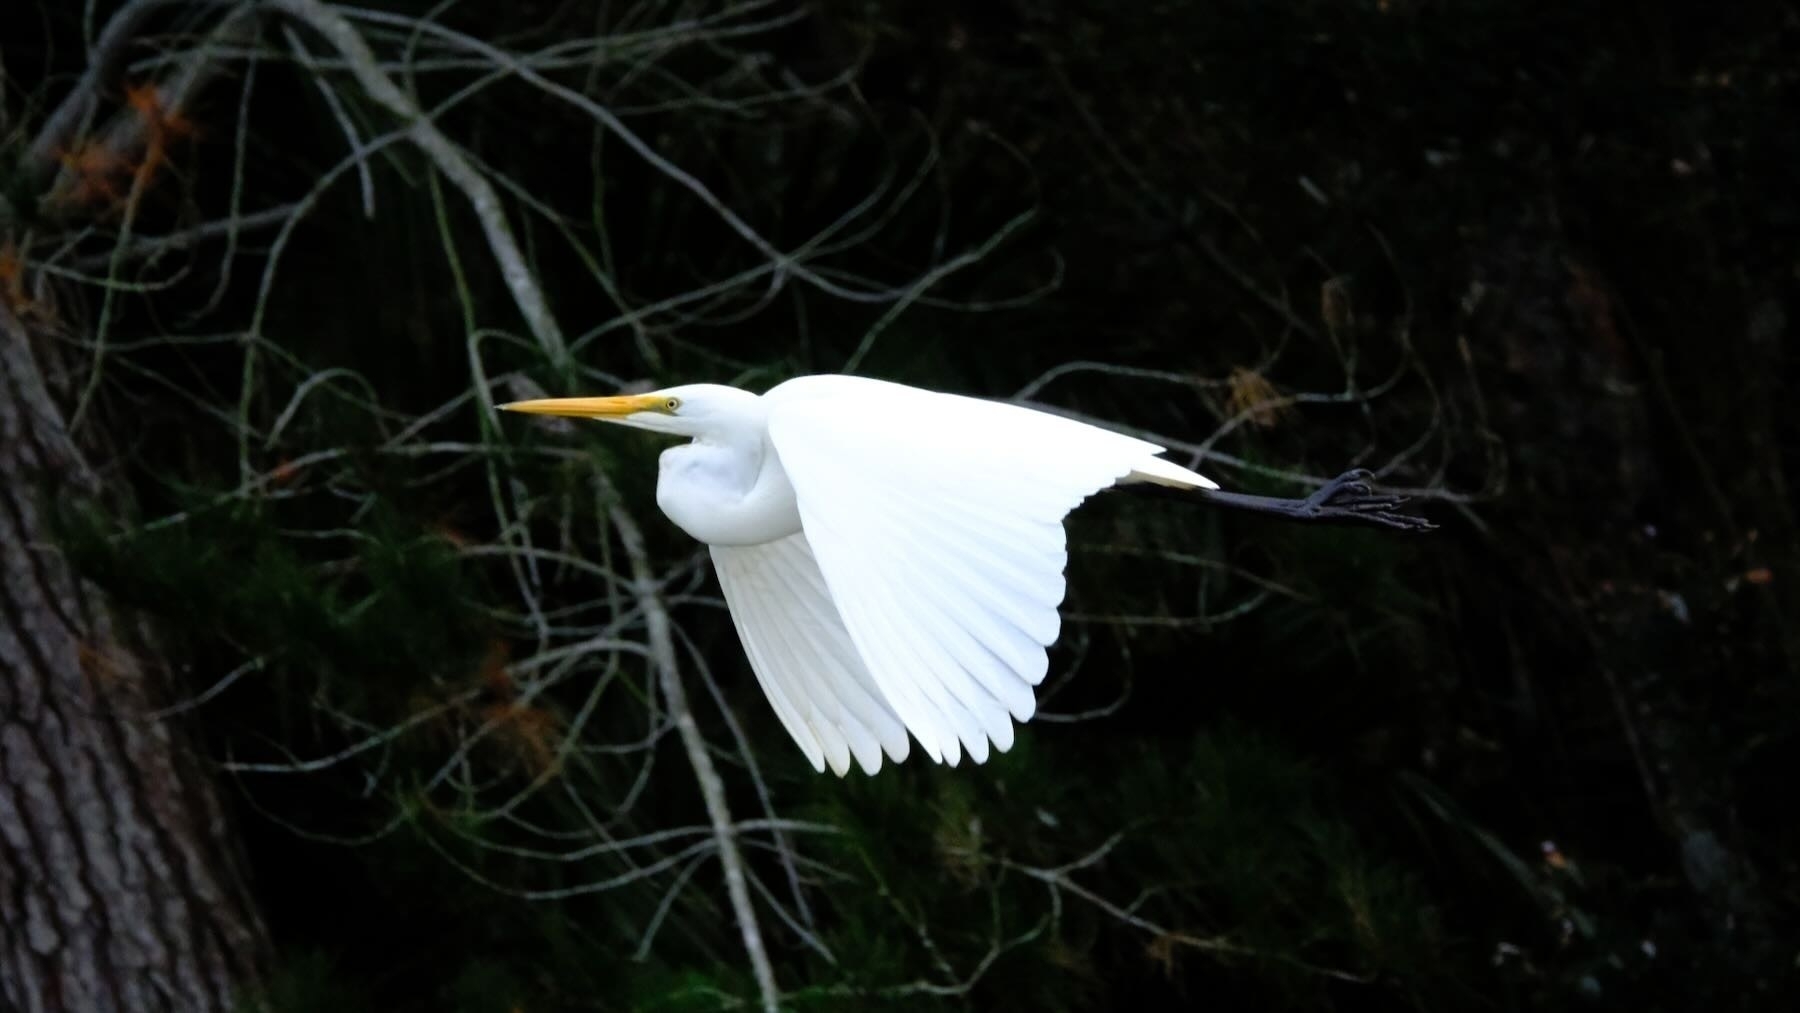 Pure white bird with sharp yellow beak and neck kinked flies across the image. 